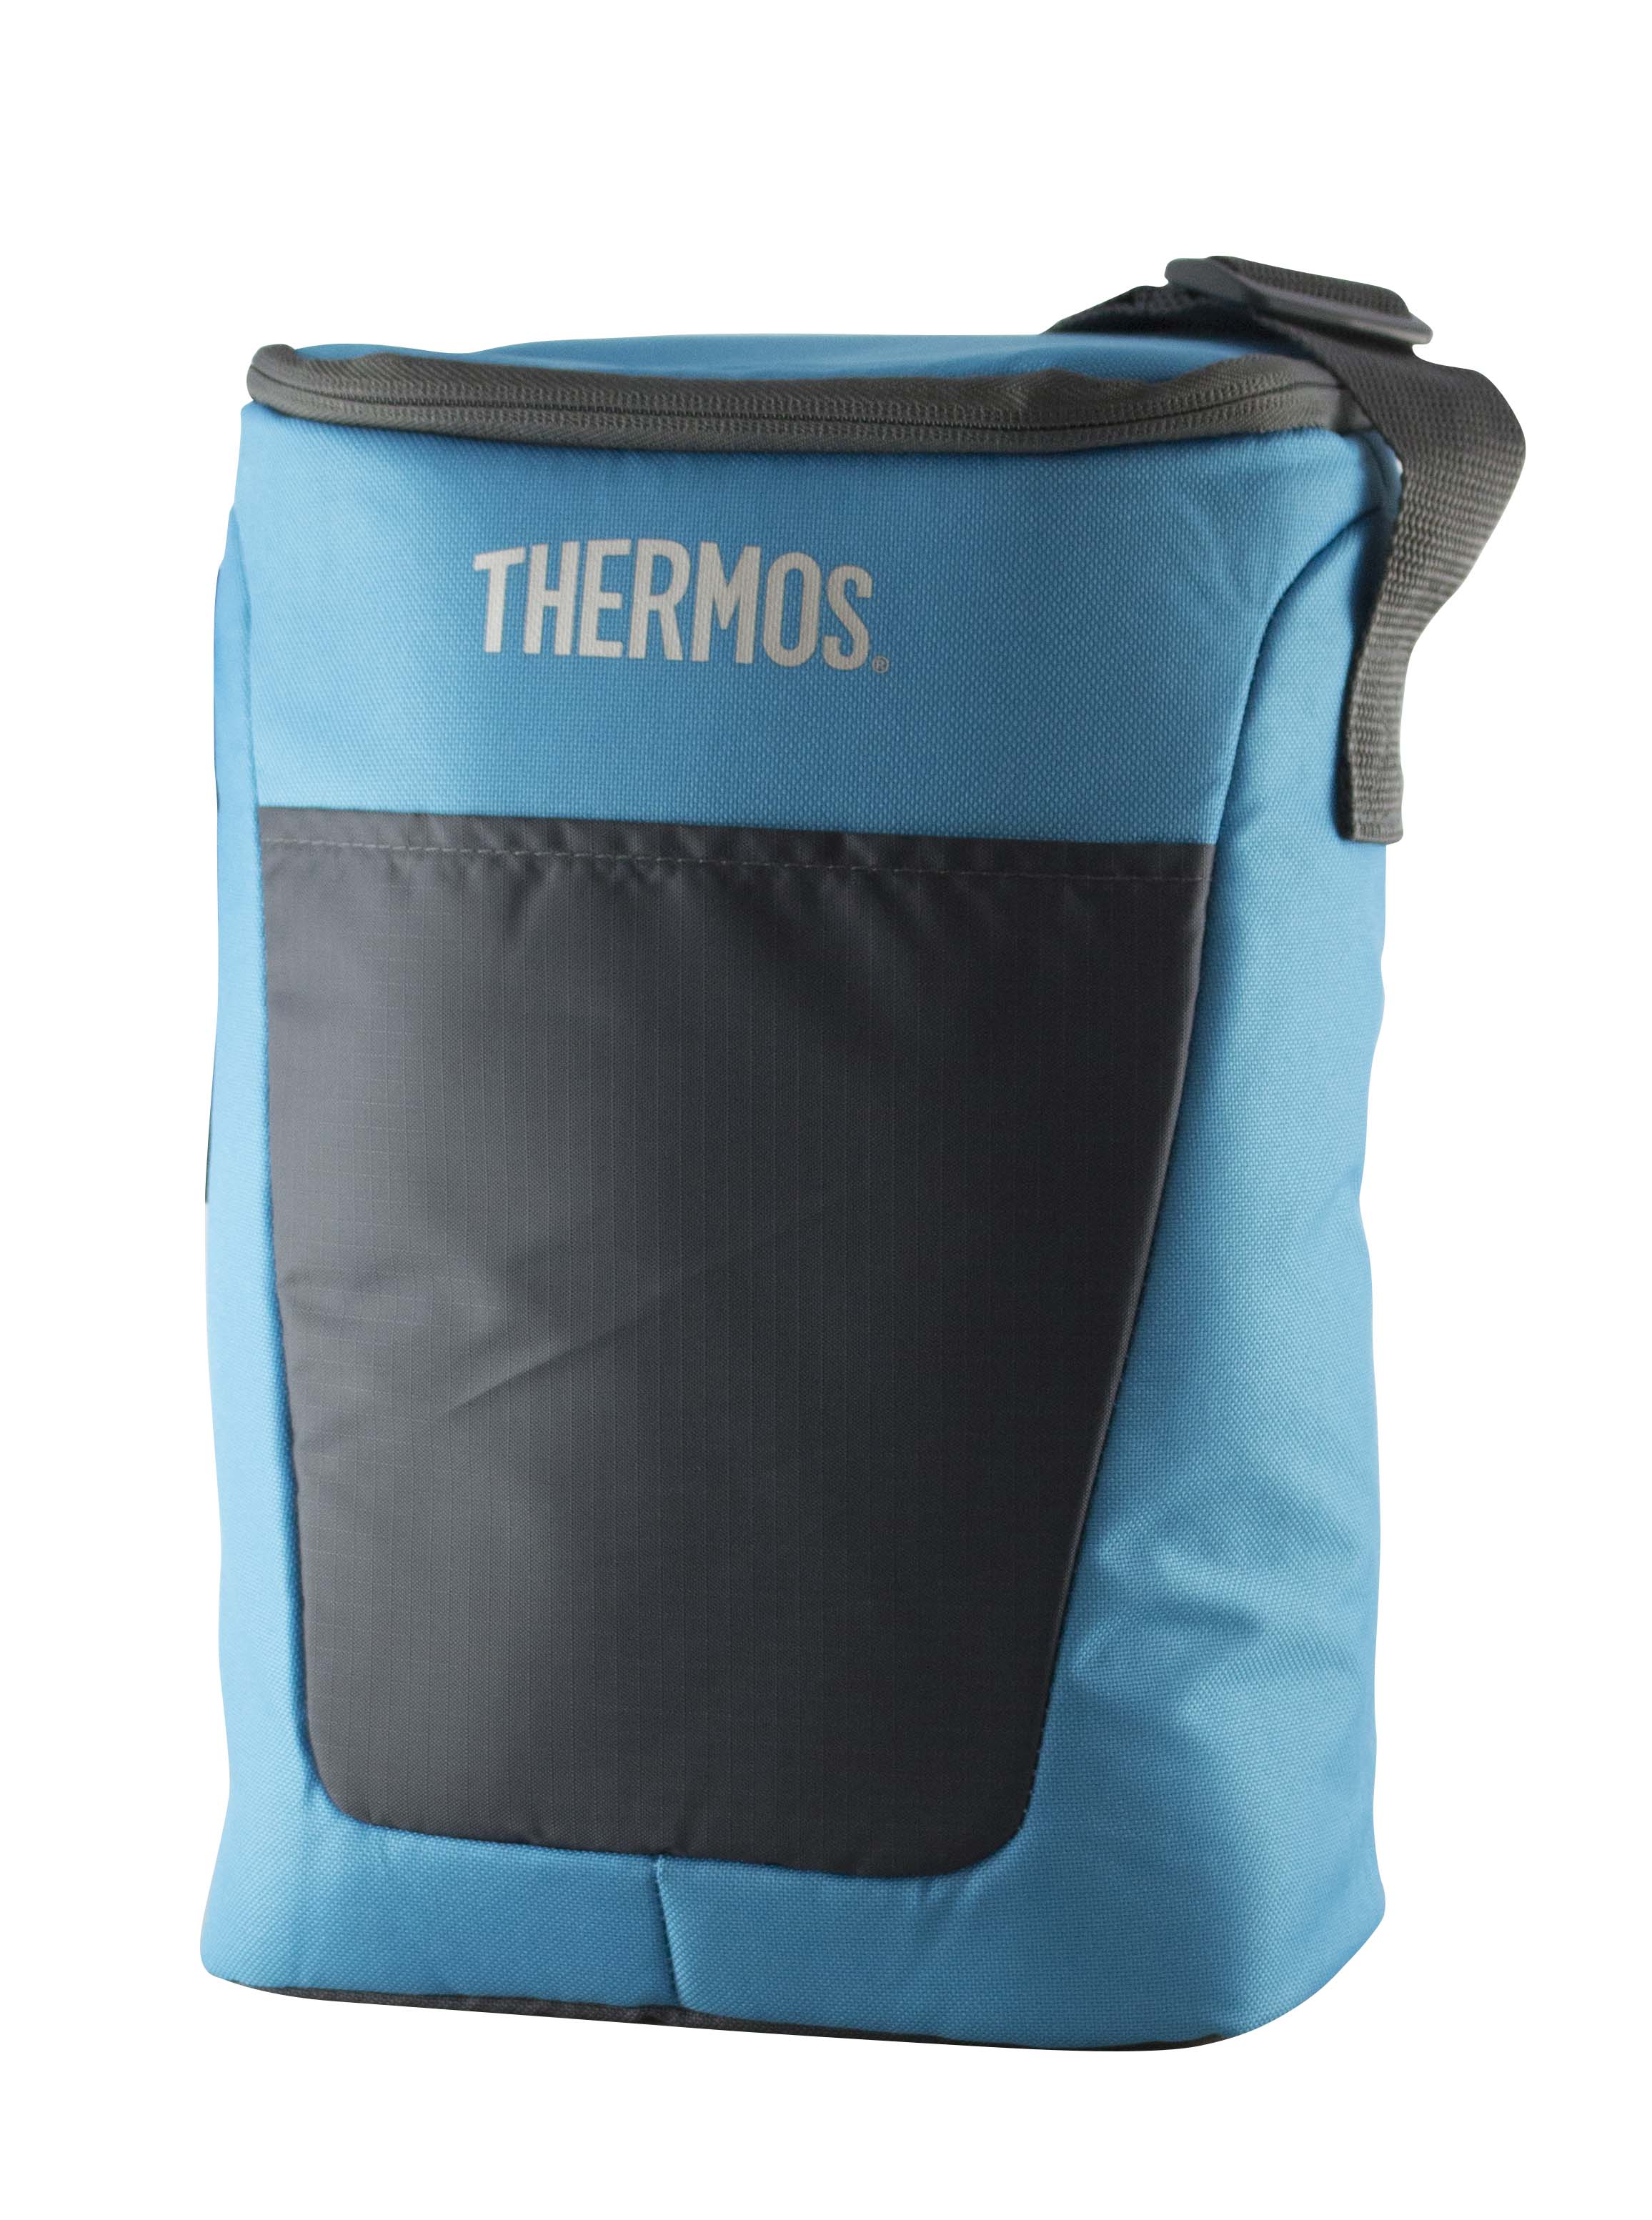 Сумка-термос Thermos Classic 12 Can Cooler 8л (940230 Синий )